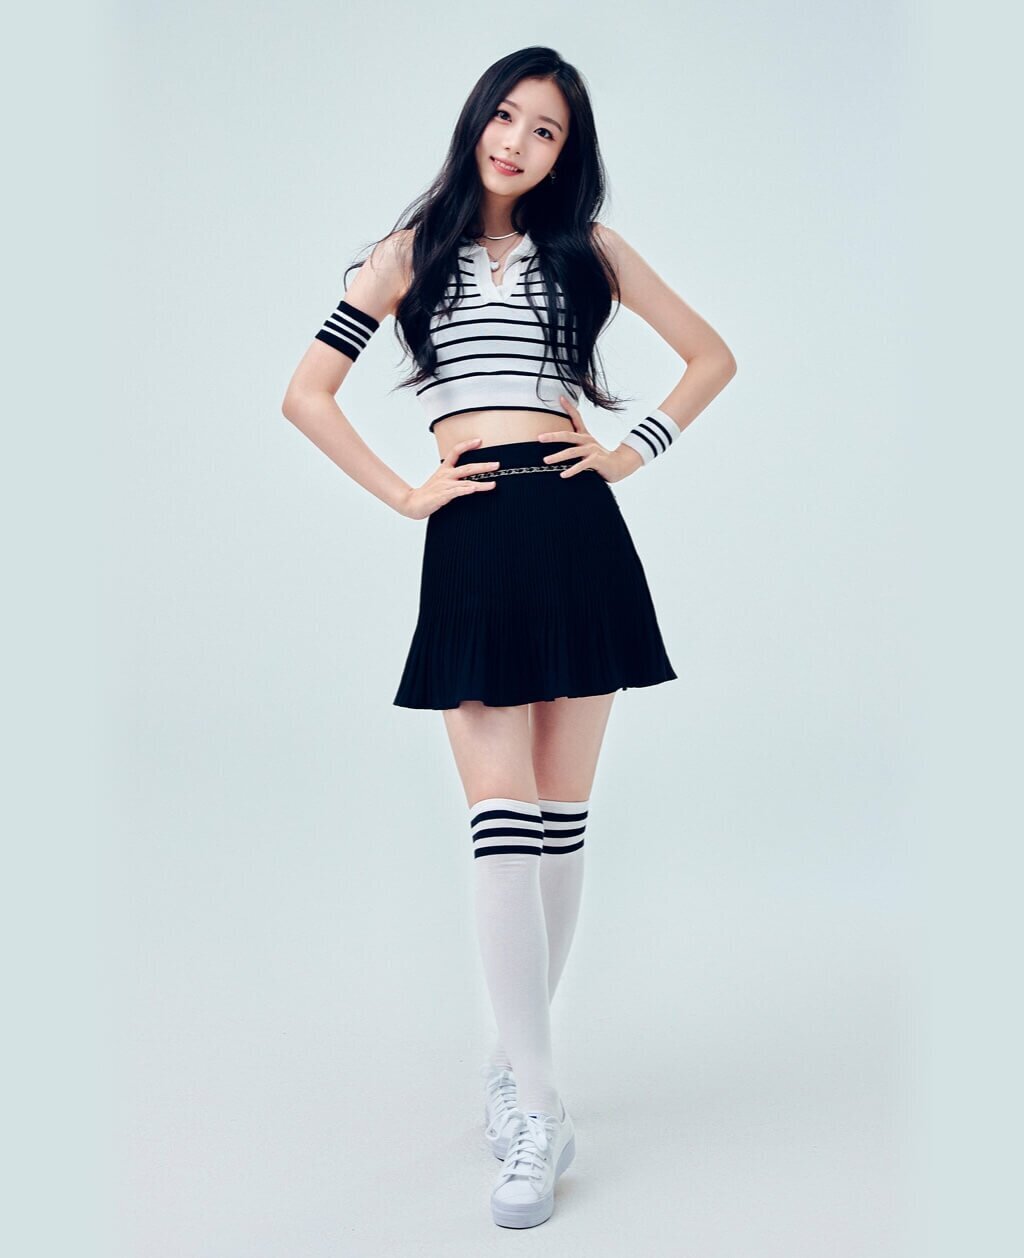 Kim Yunseo My Teenage Girl profile photos | kpopping